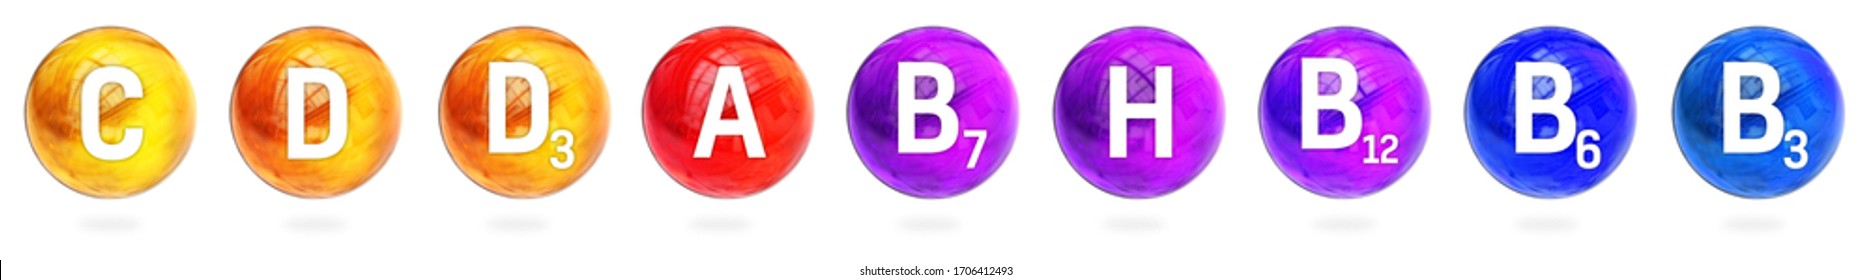 Vitamin set C, D, E, A ,H, B12 sphere molecule for healthcare medical pharmacy. Shining symbol of Vitamin C, D , E, H, B3, B6,  B12.  Ascorbic acid, biotin, niacin. Vitamins icon set . 3D rendering.
